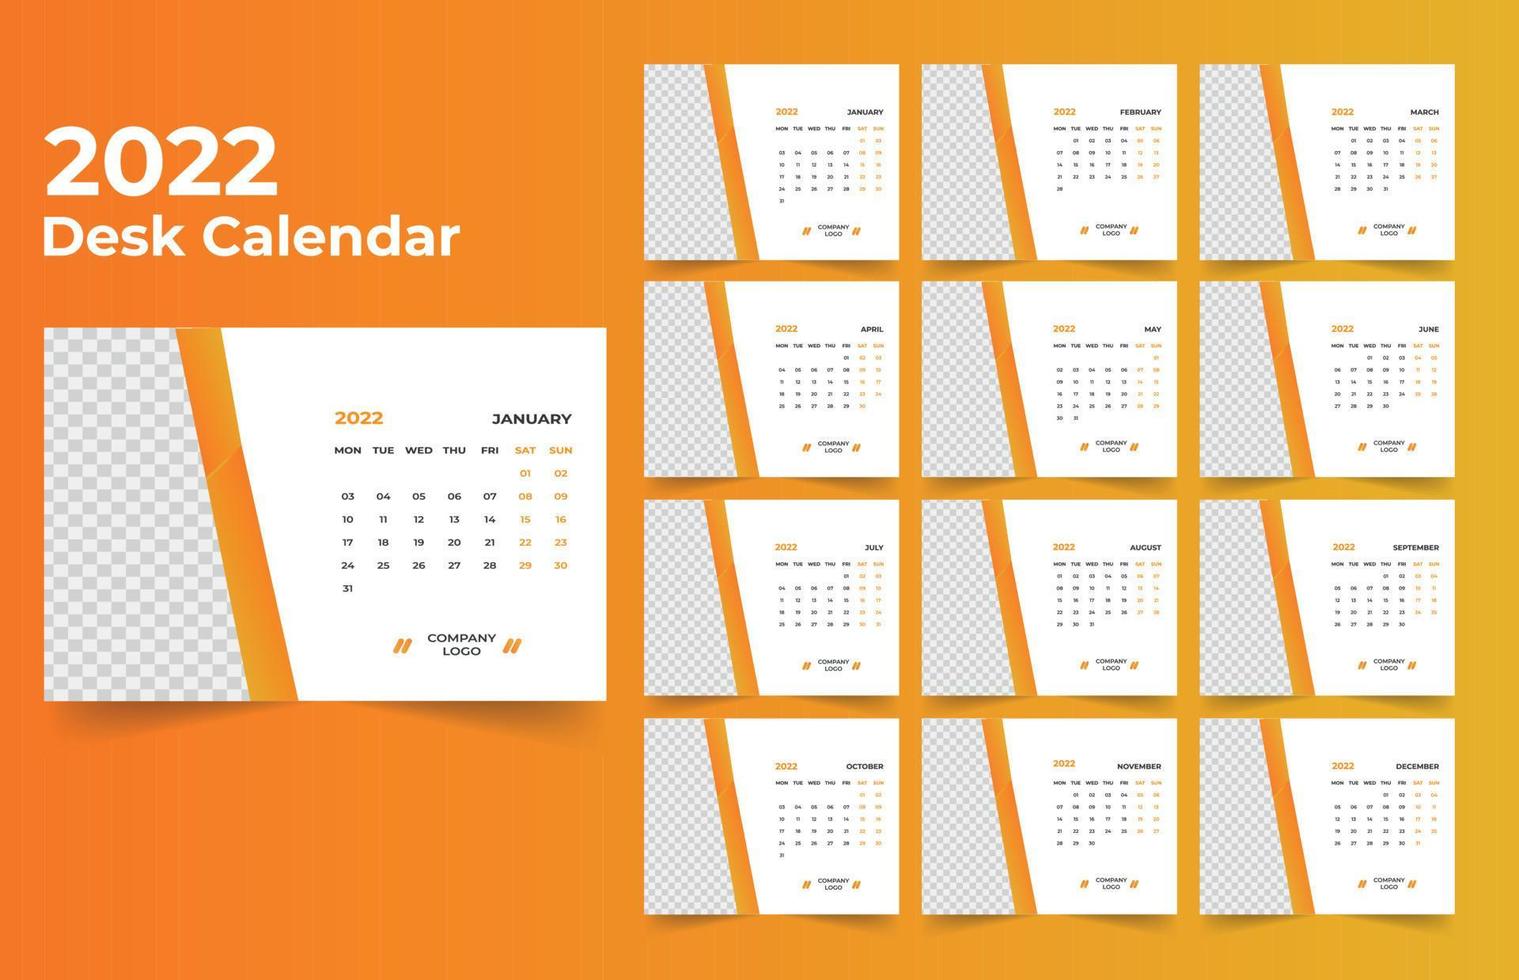 2022 Desk Calendar Template Design vector